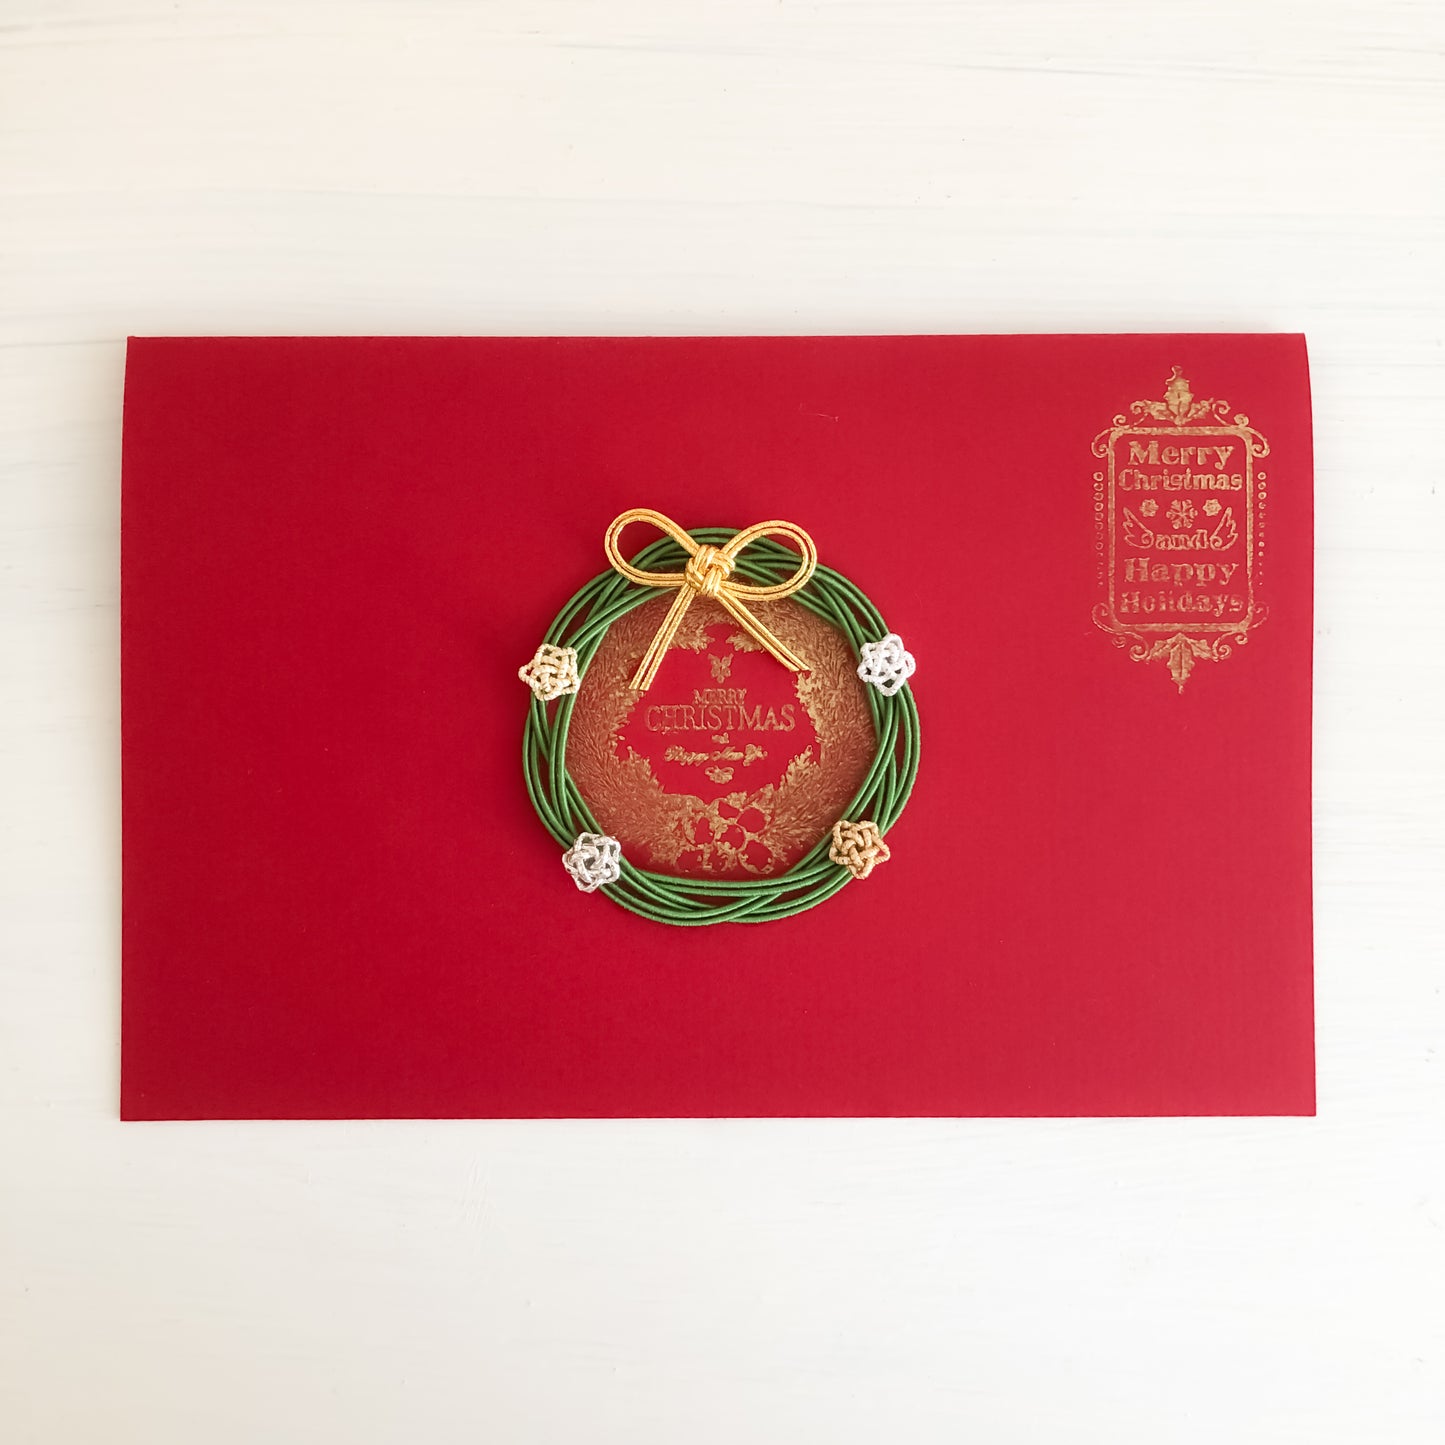 Mizuhiki Christmas Card -May you have a joyful and festive Christmas-